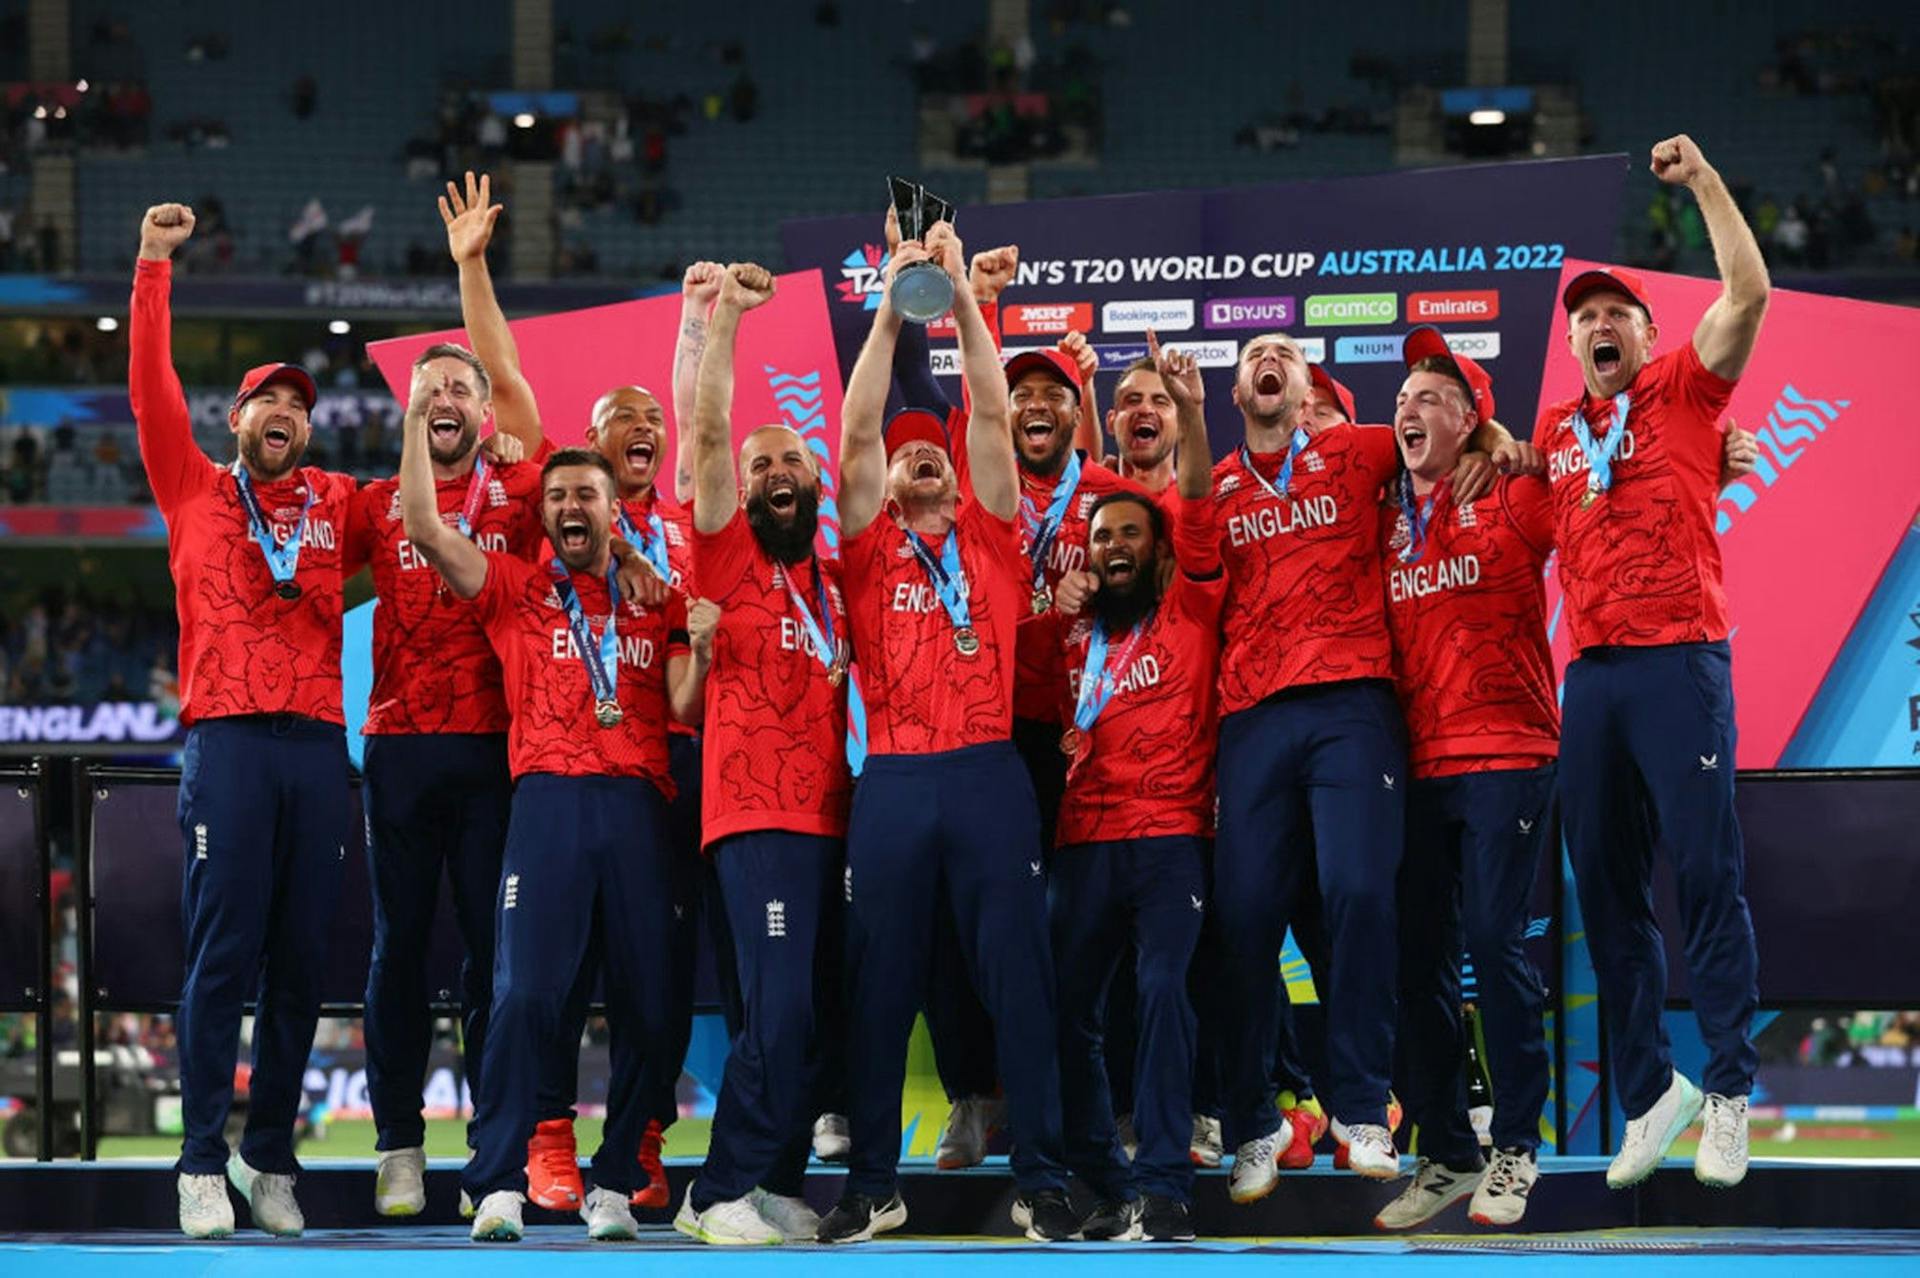 England celebrates winning T20 World Cup trophy 